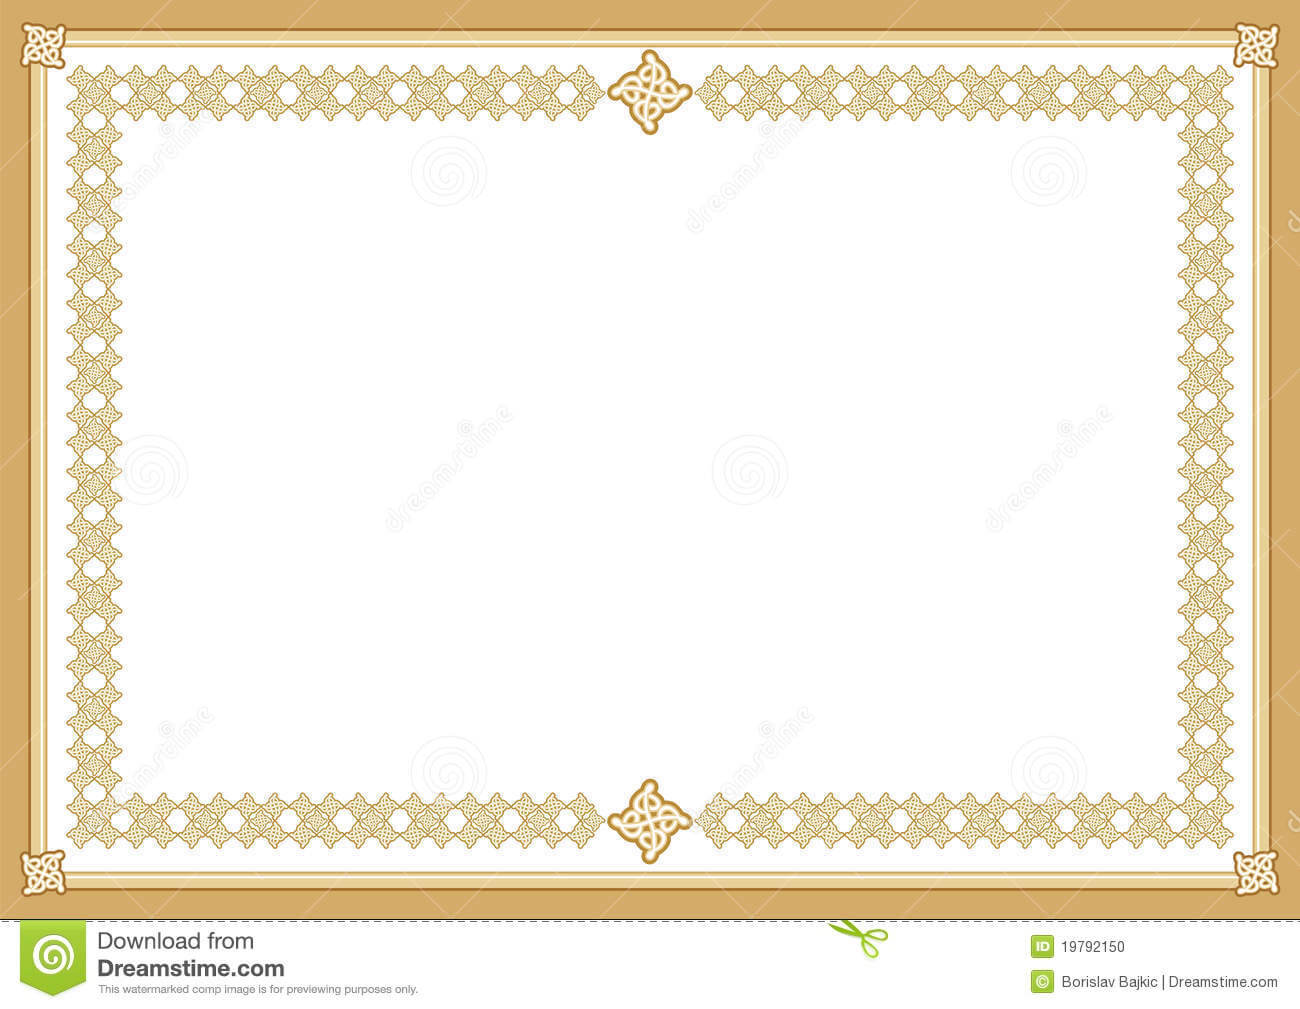 Certificate Stock Vector. Illustration Of Award, Blank Within Award Certificate Border Template